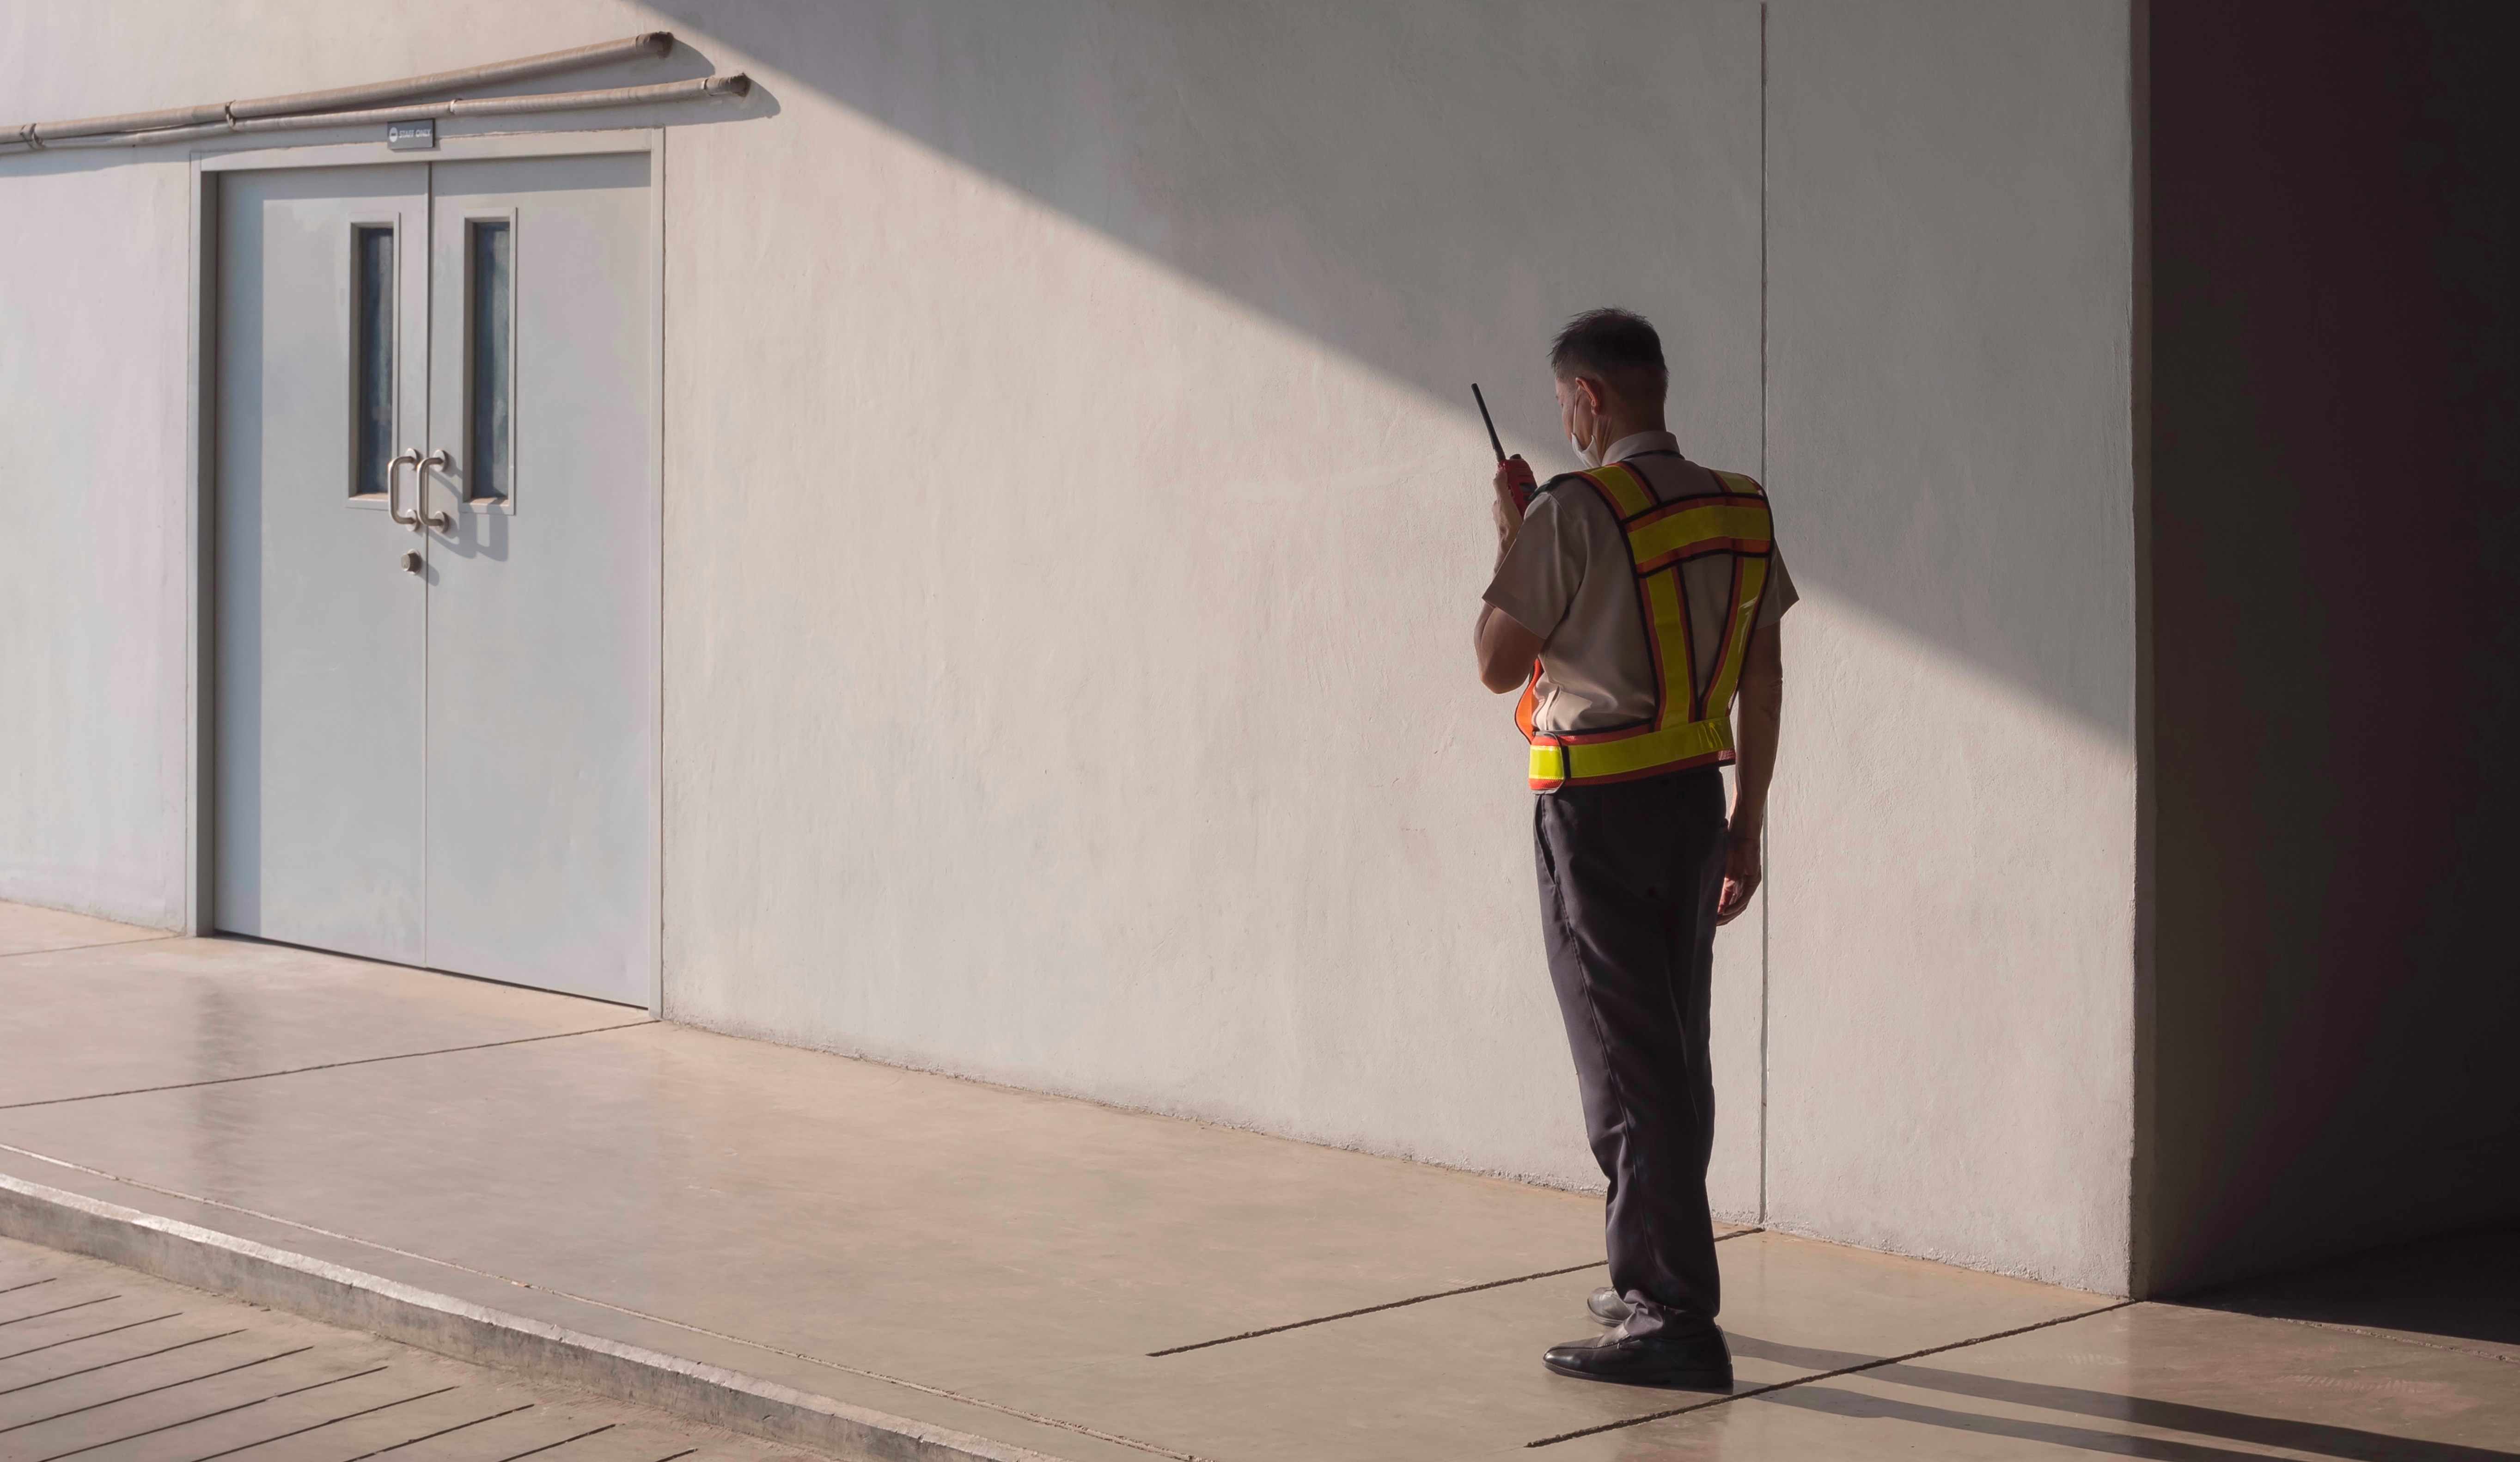 Security guard using walkie talkie while working in parking garage